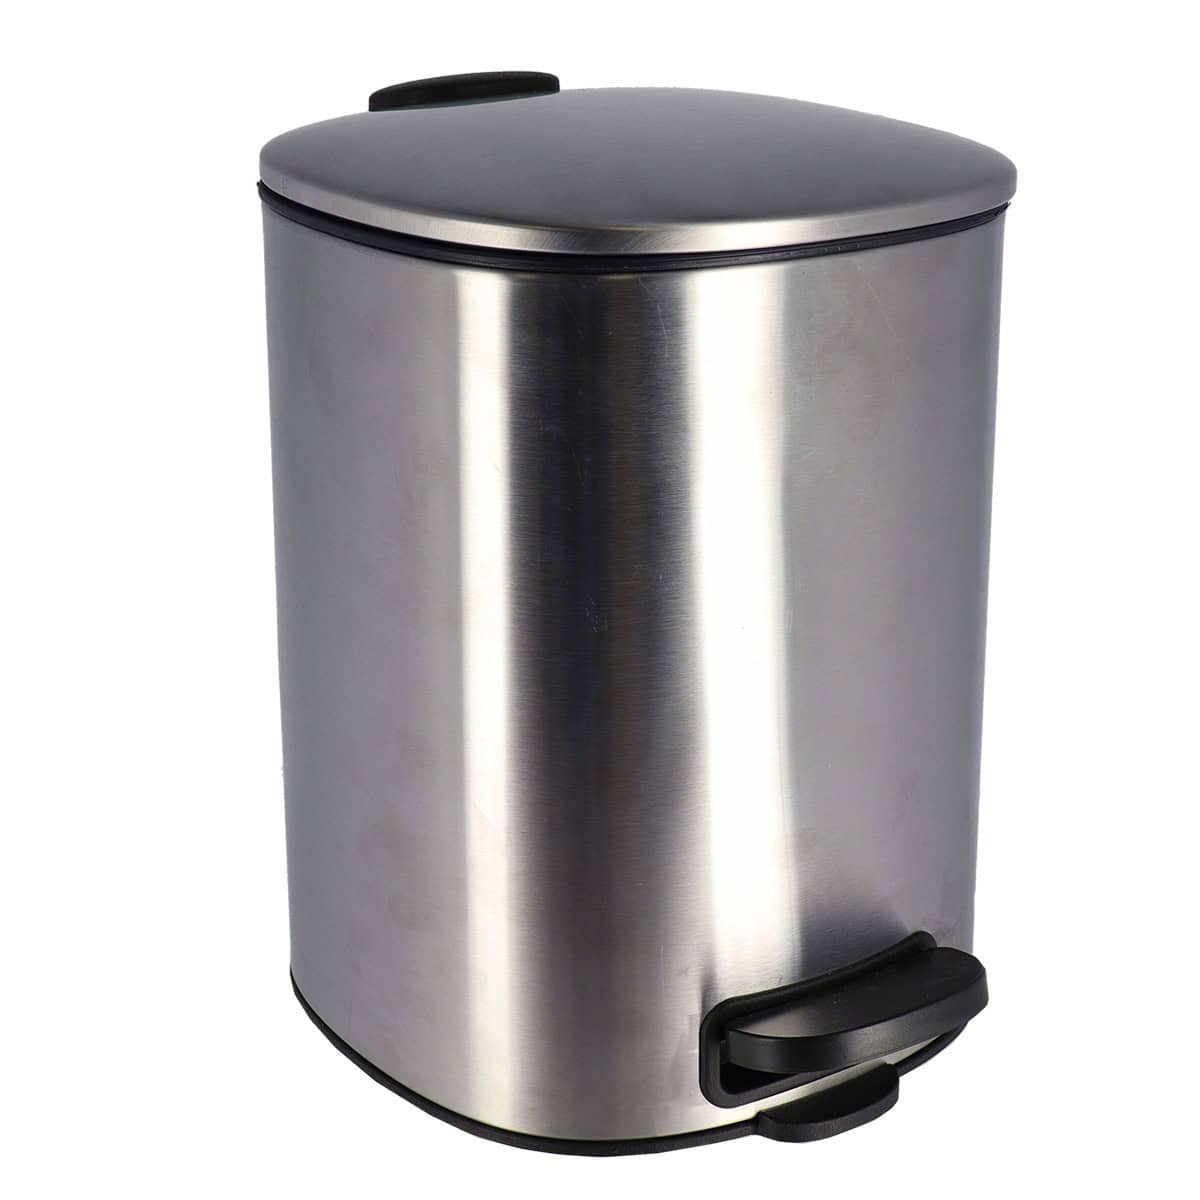 a chrome metal trash can, square design